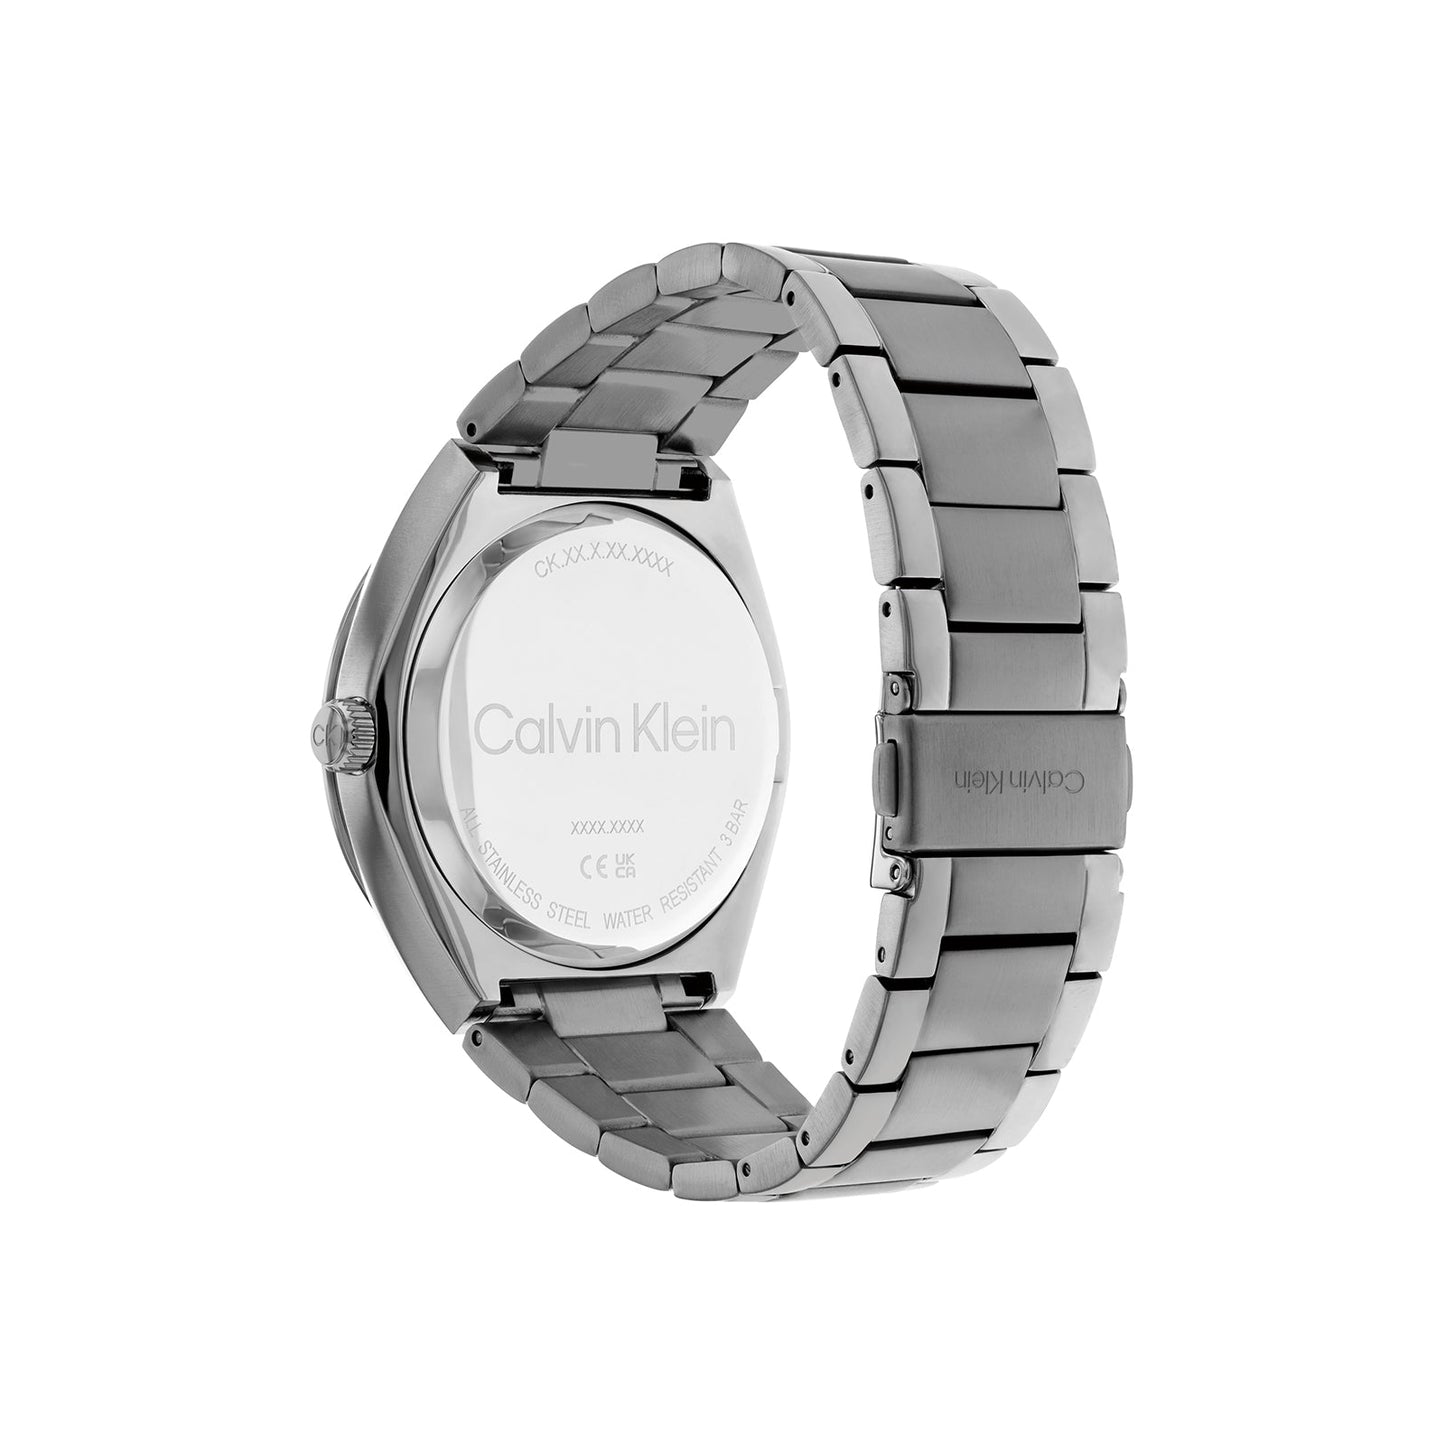 Calvin Klein 25200197 Men's Steel Watch